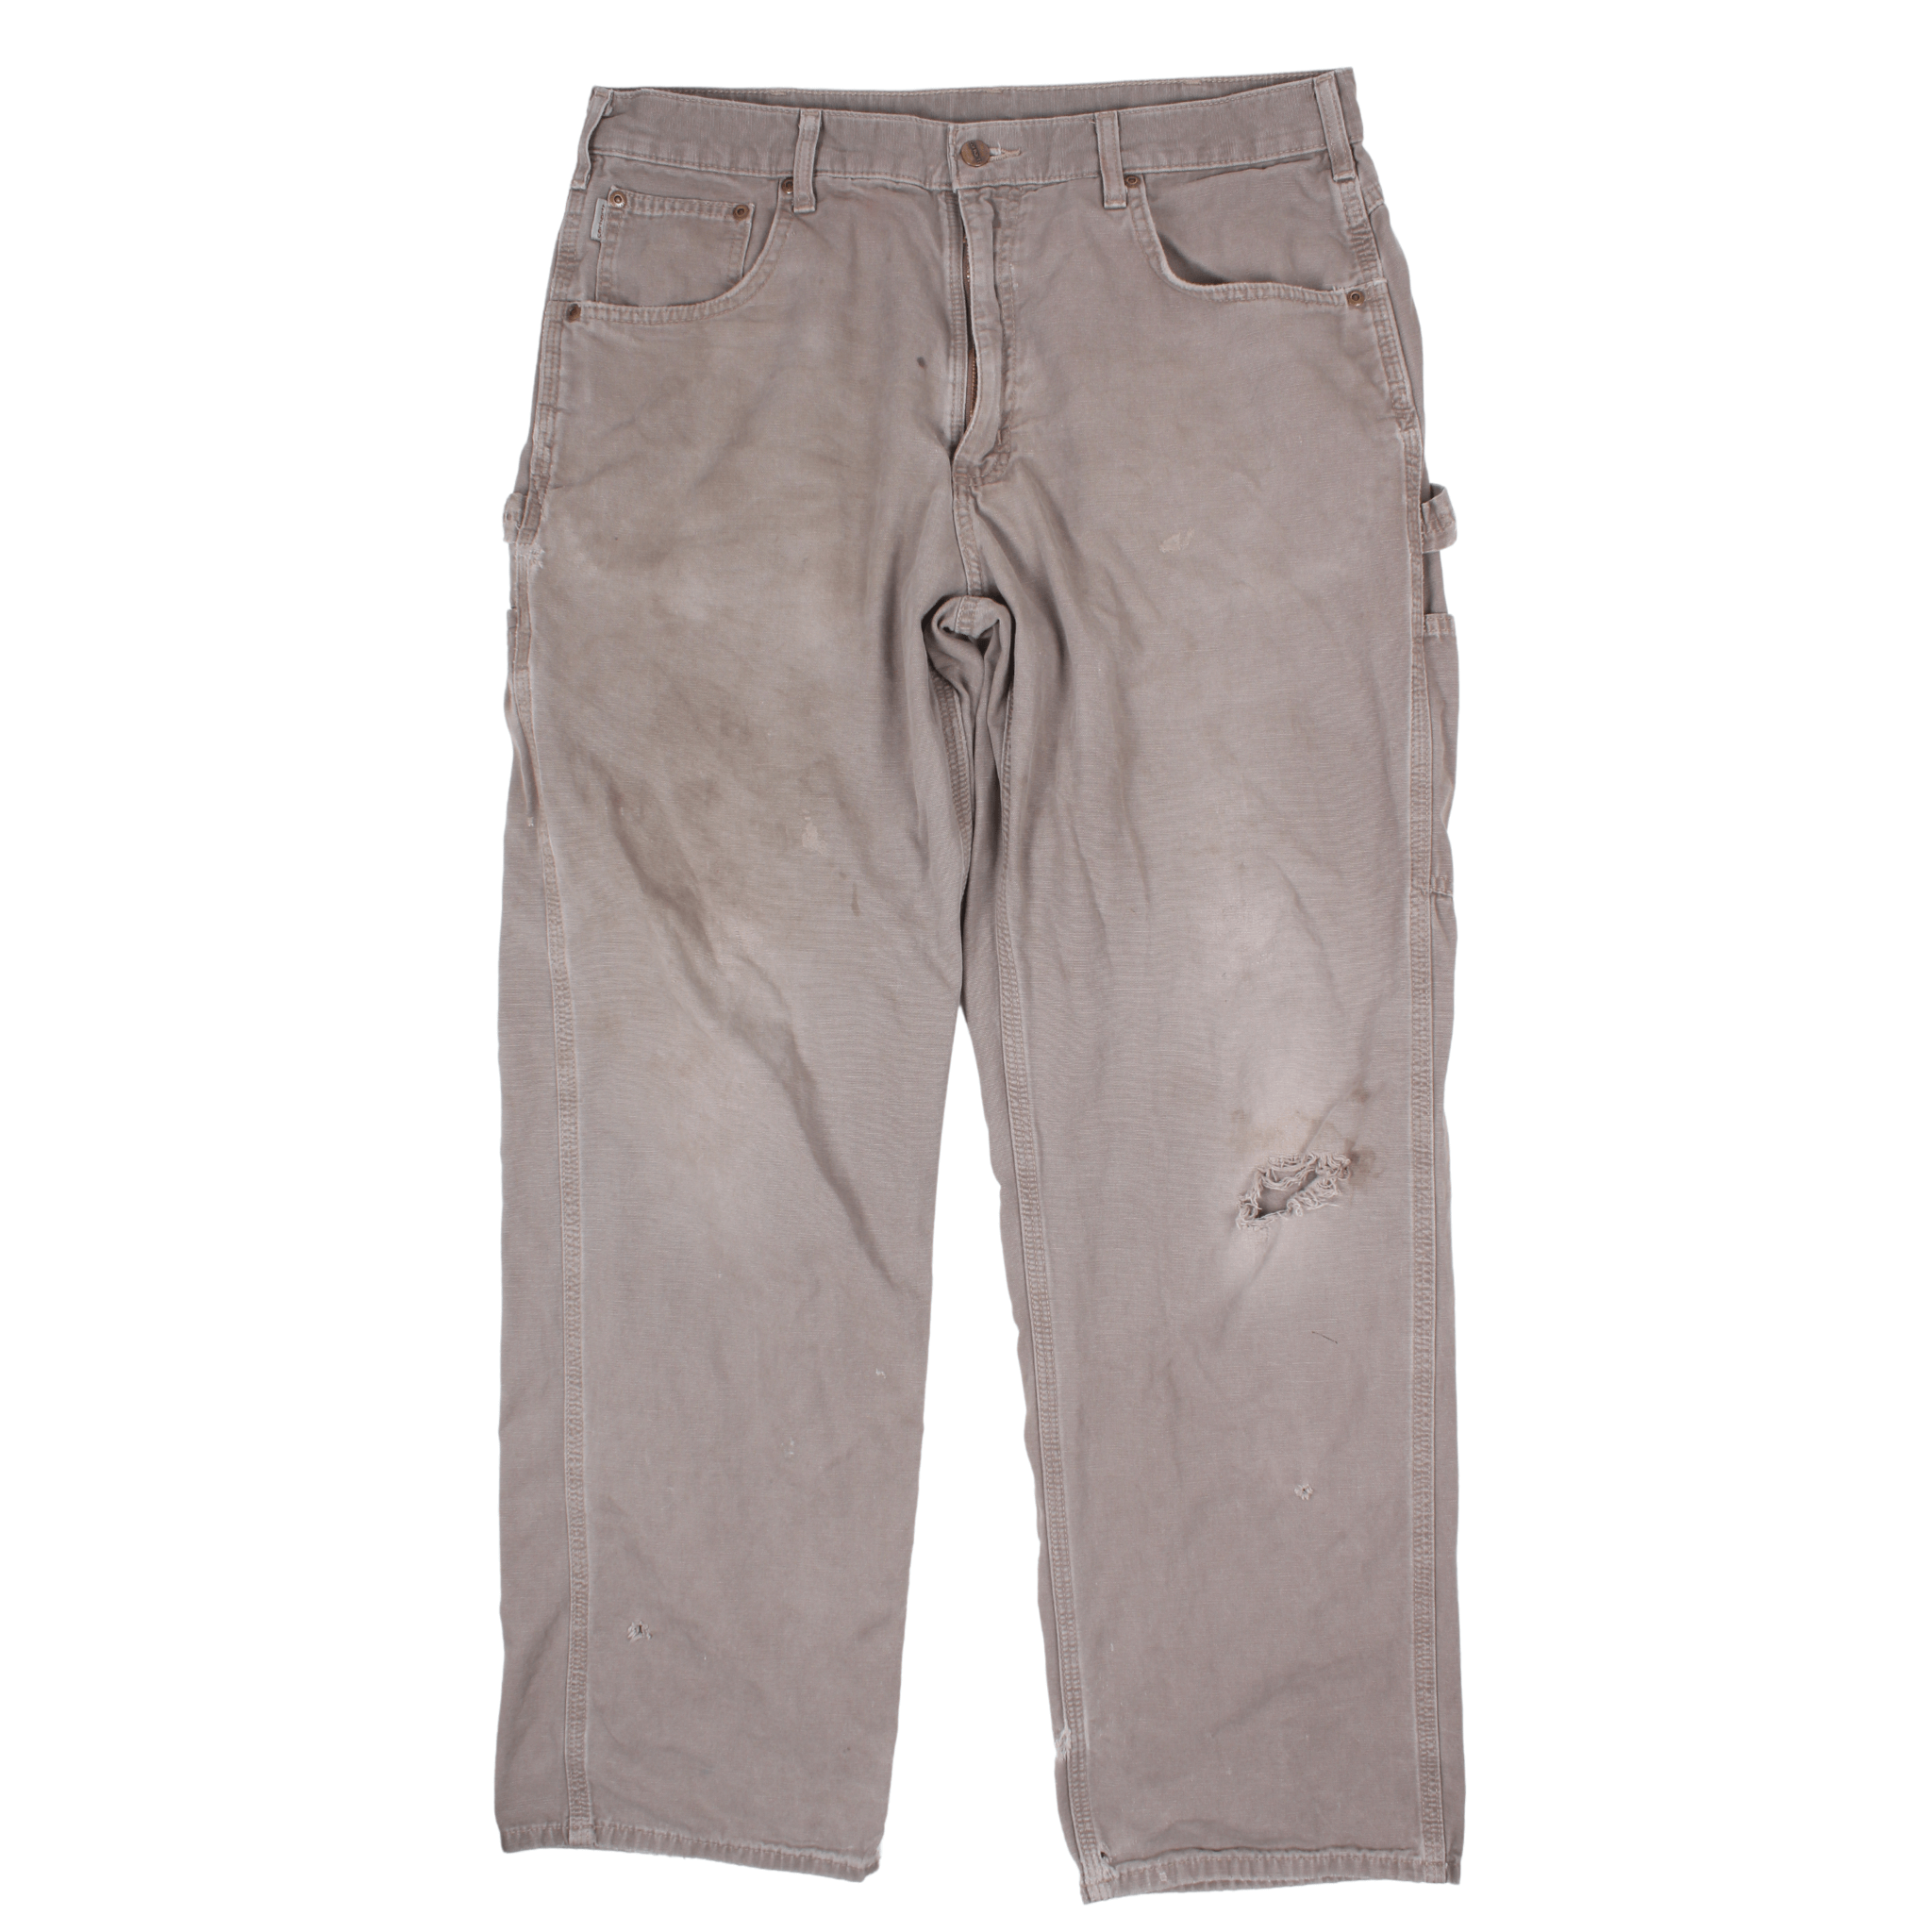 Vintage Carhartt Carpenter Trousers (36